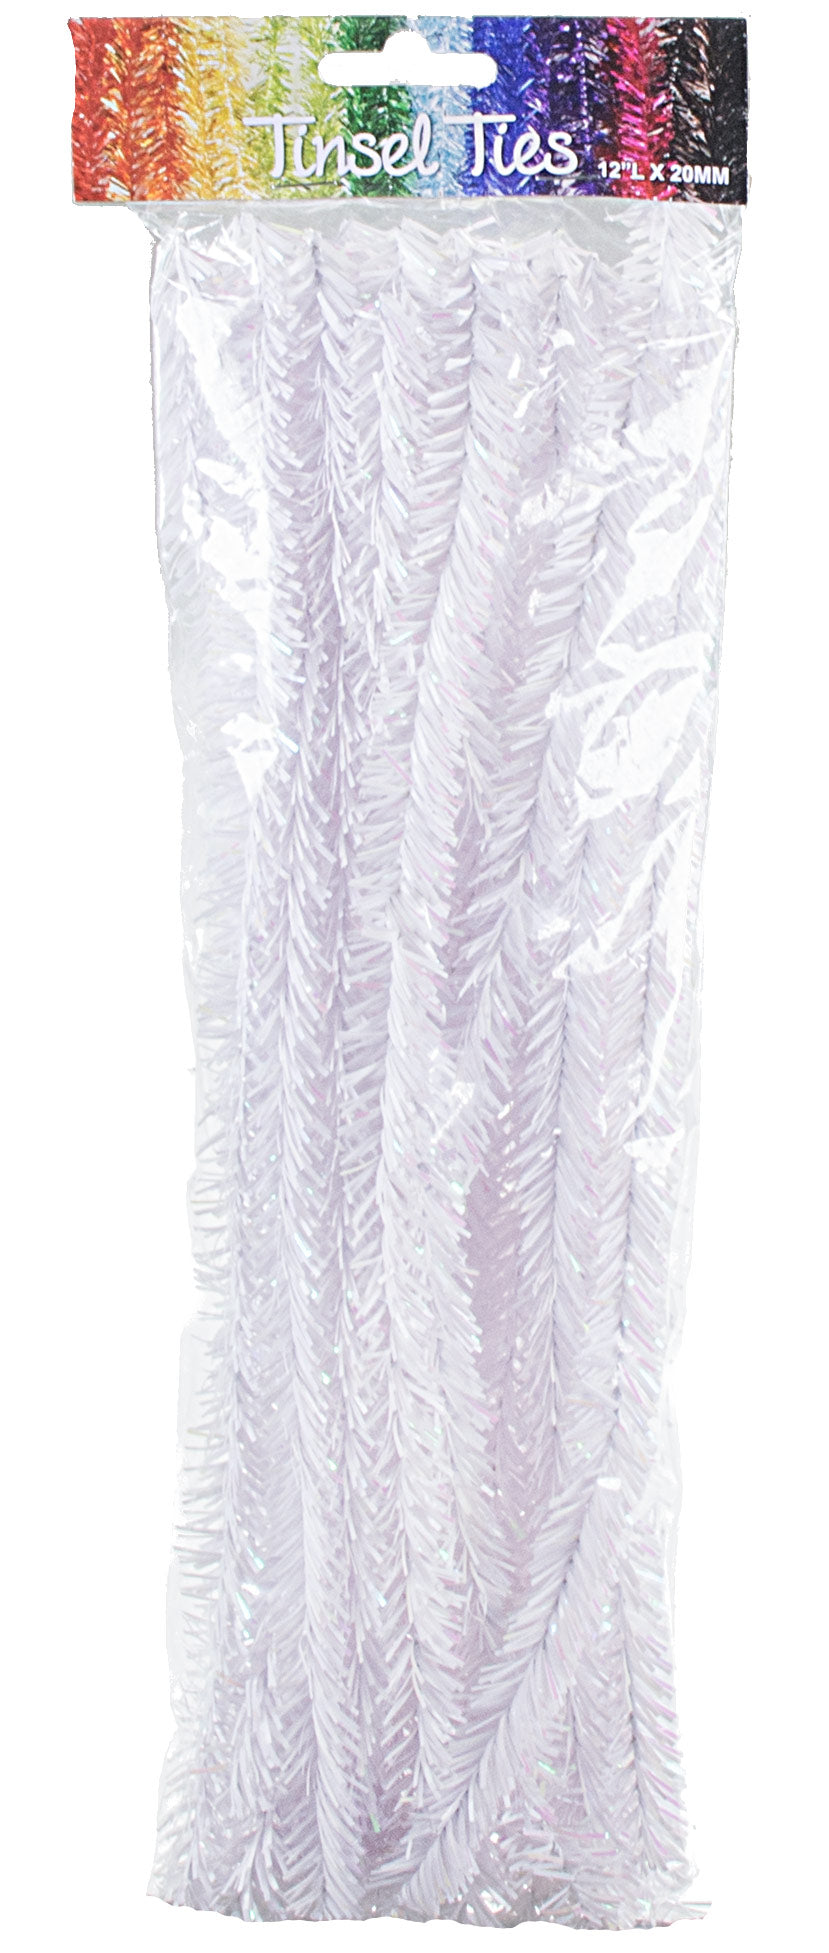 20mm Tinsel Tie Stems: Metallic White (25)